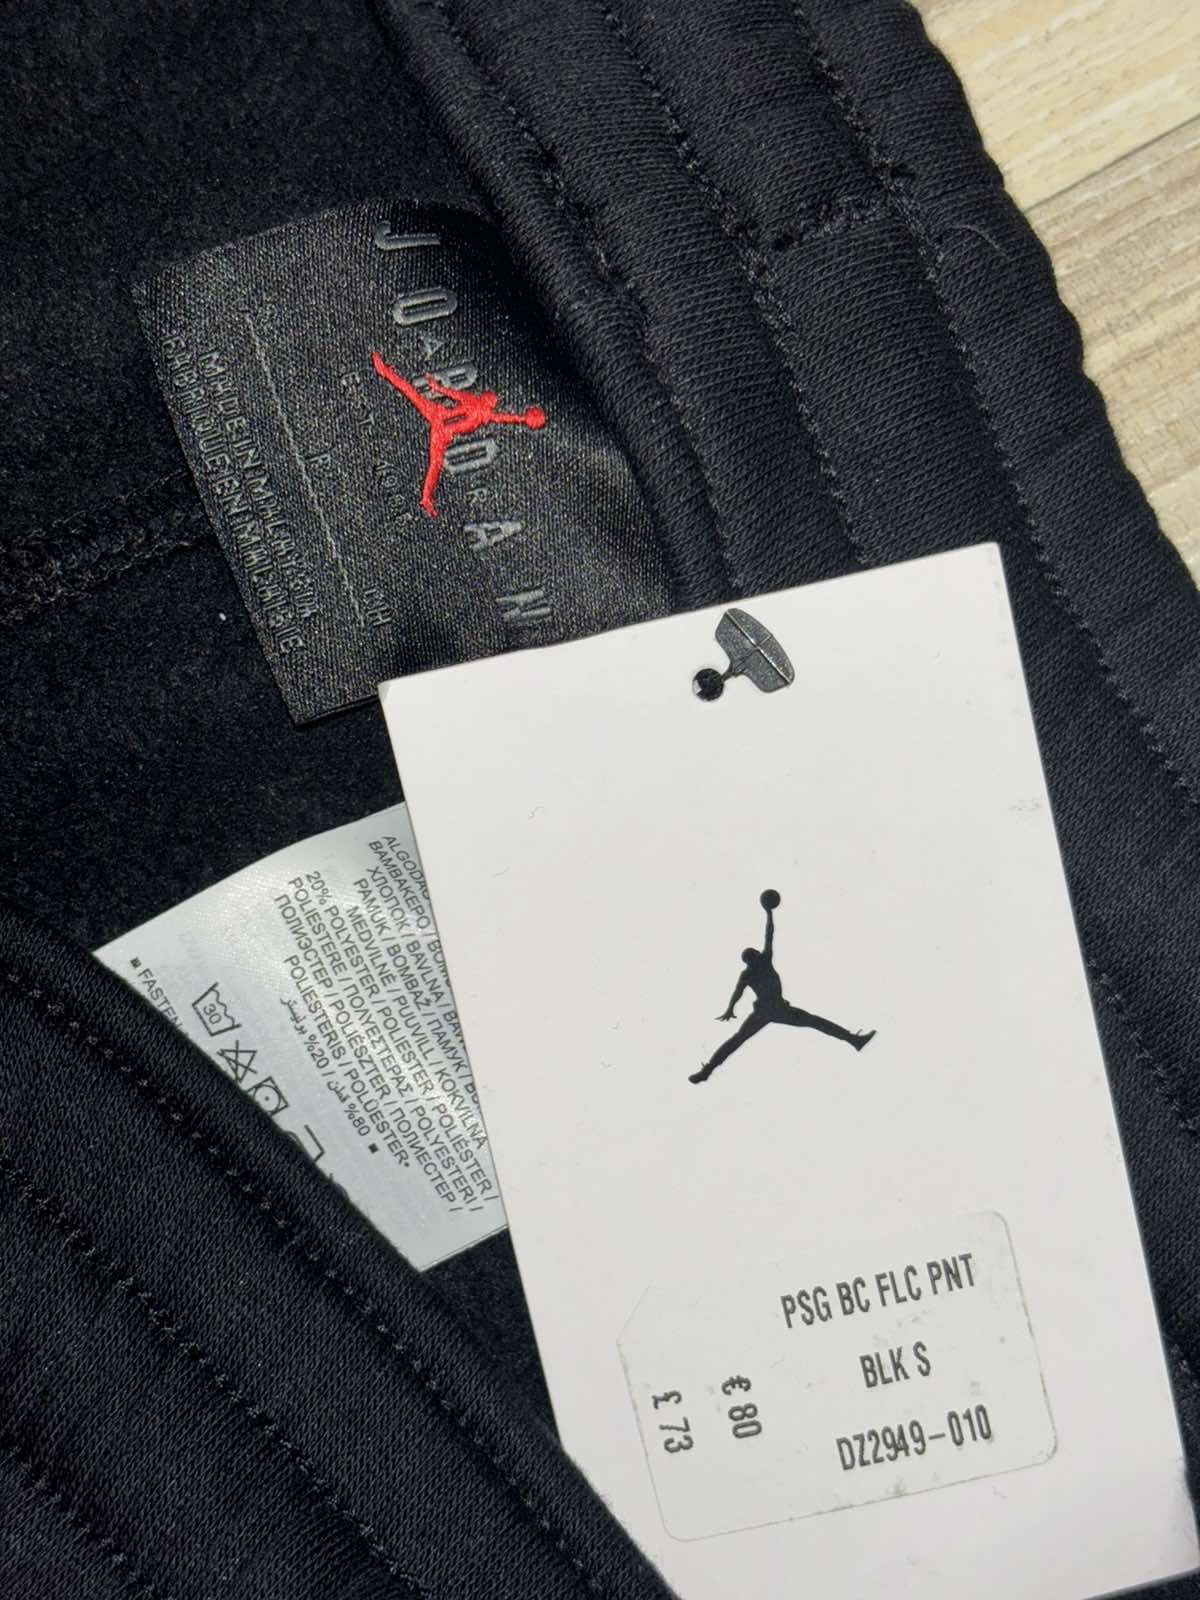 Jordan PSG Black Fleece Sweatpants